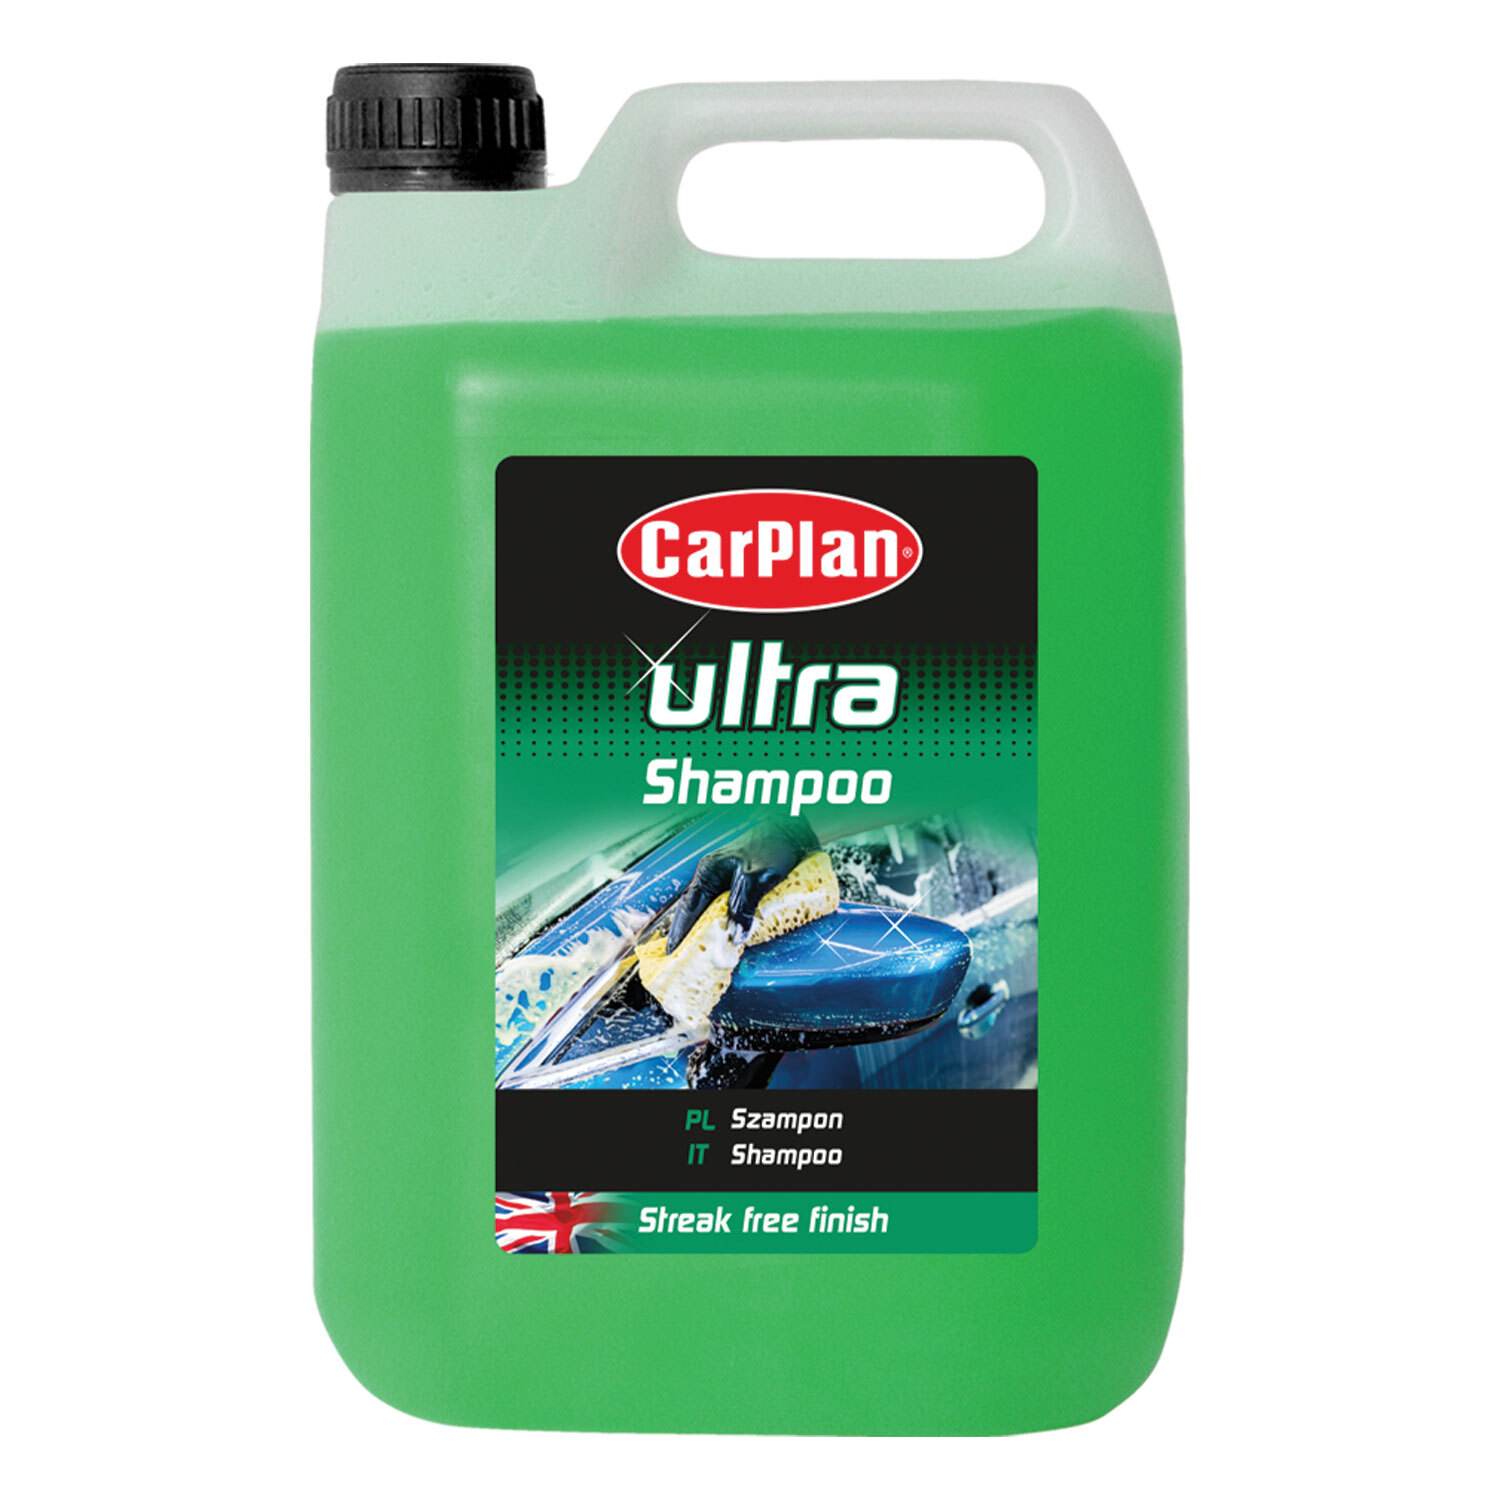 CarPlan Ultra Shampoo Image